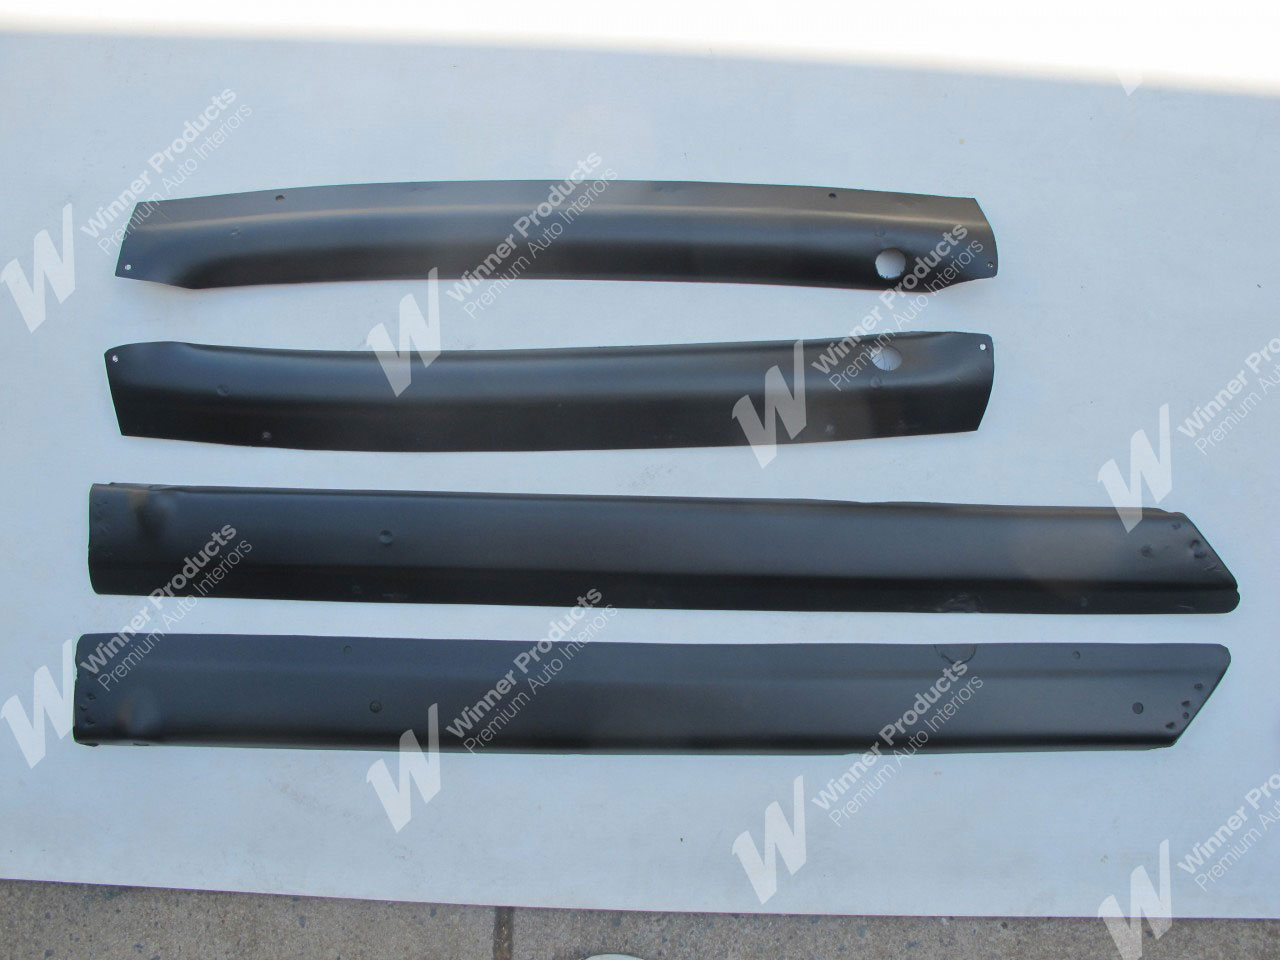 Holden Torana LC Torana XU1 Coupe Top of Doors (Image 1 of 3)